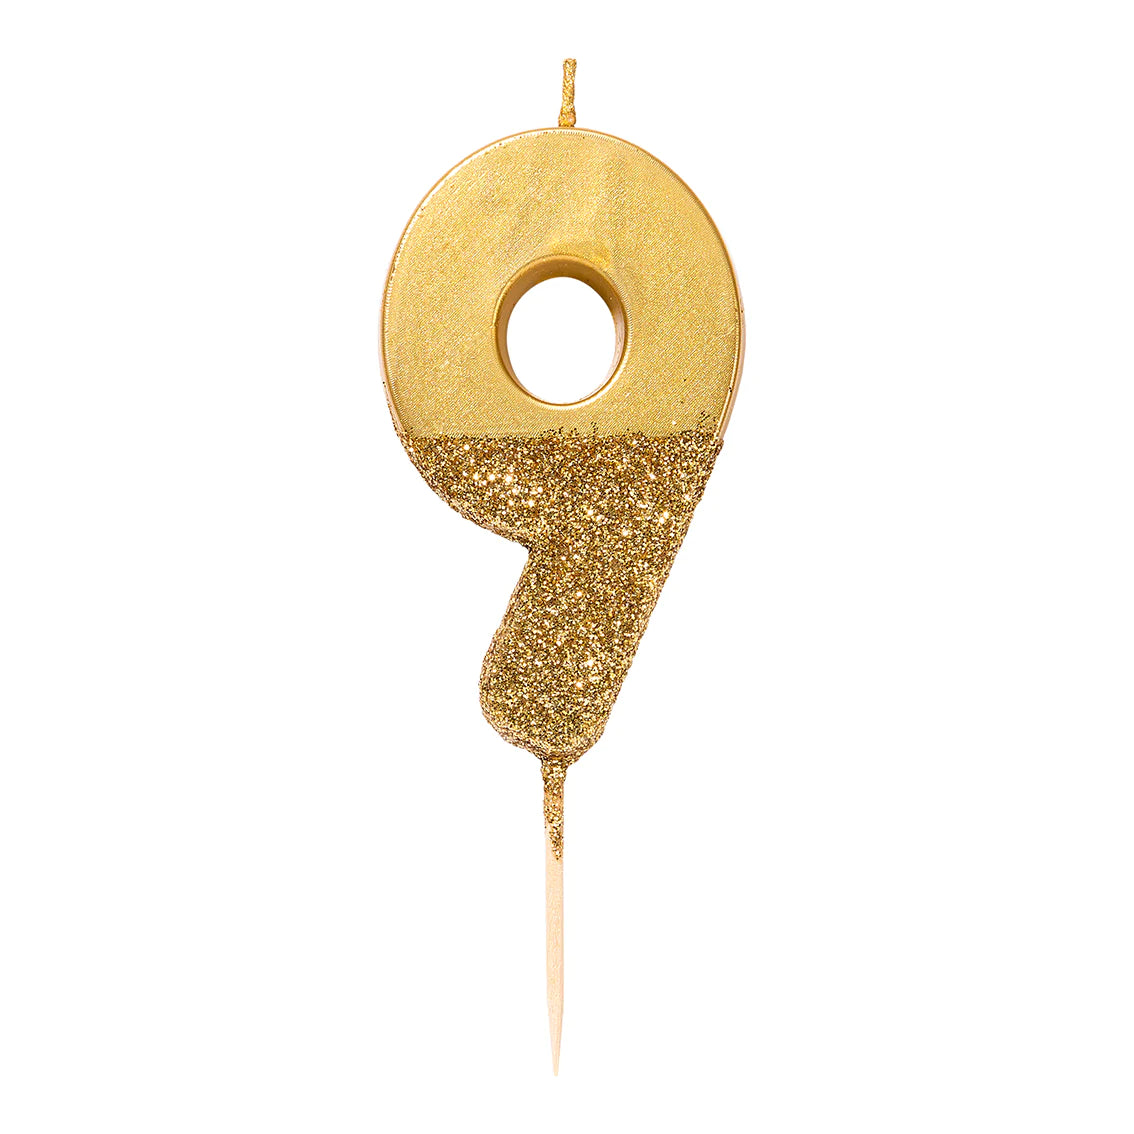 Zahlenkerze "9" Gold mit Goldglitter